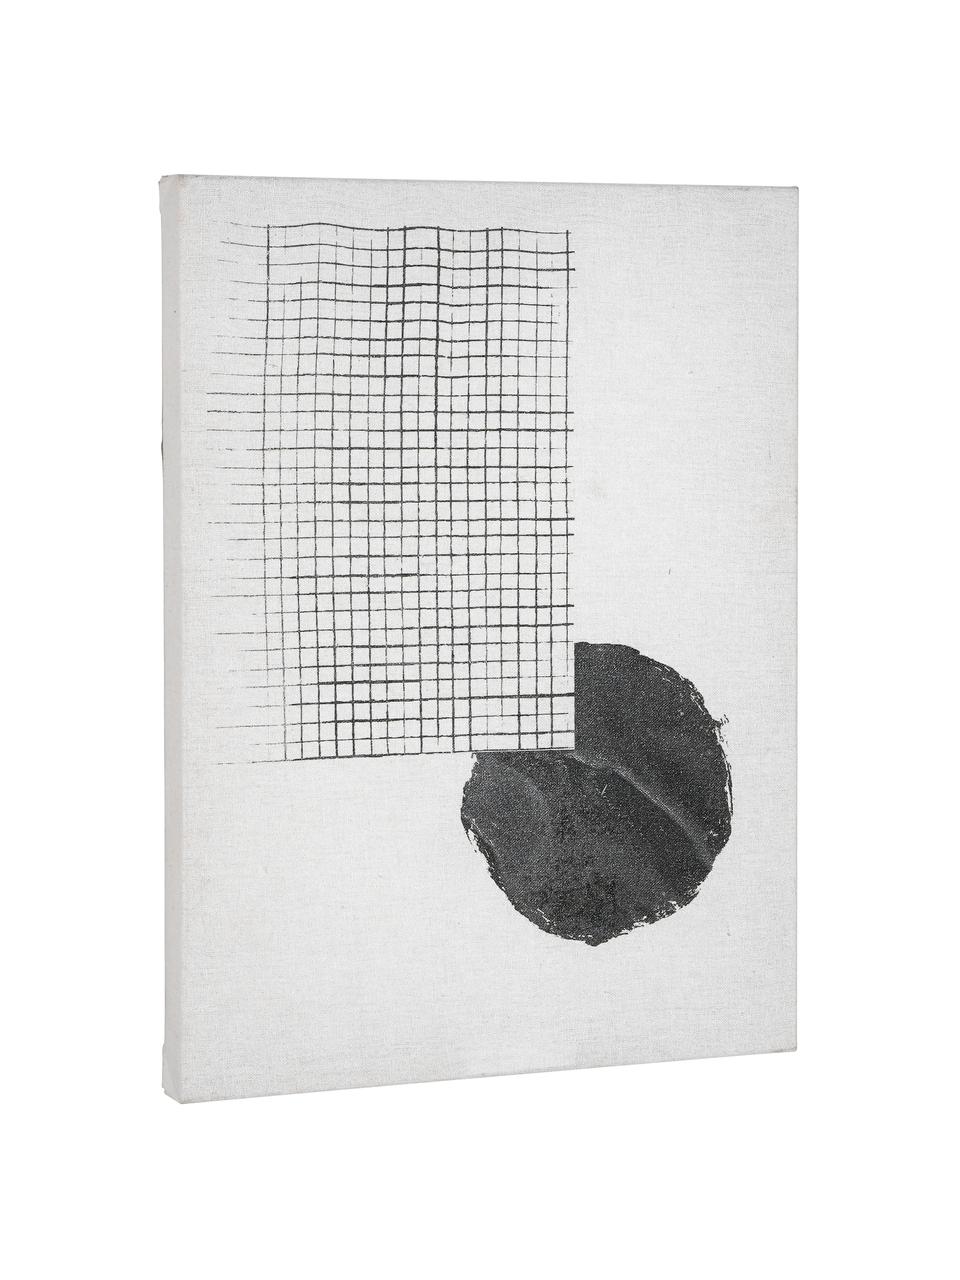 Leinwanddruck Prisma, Bild: Leinwand, Weiß, Schwarz, 30 x 40 cm